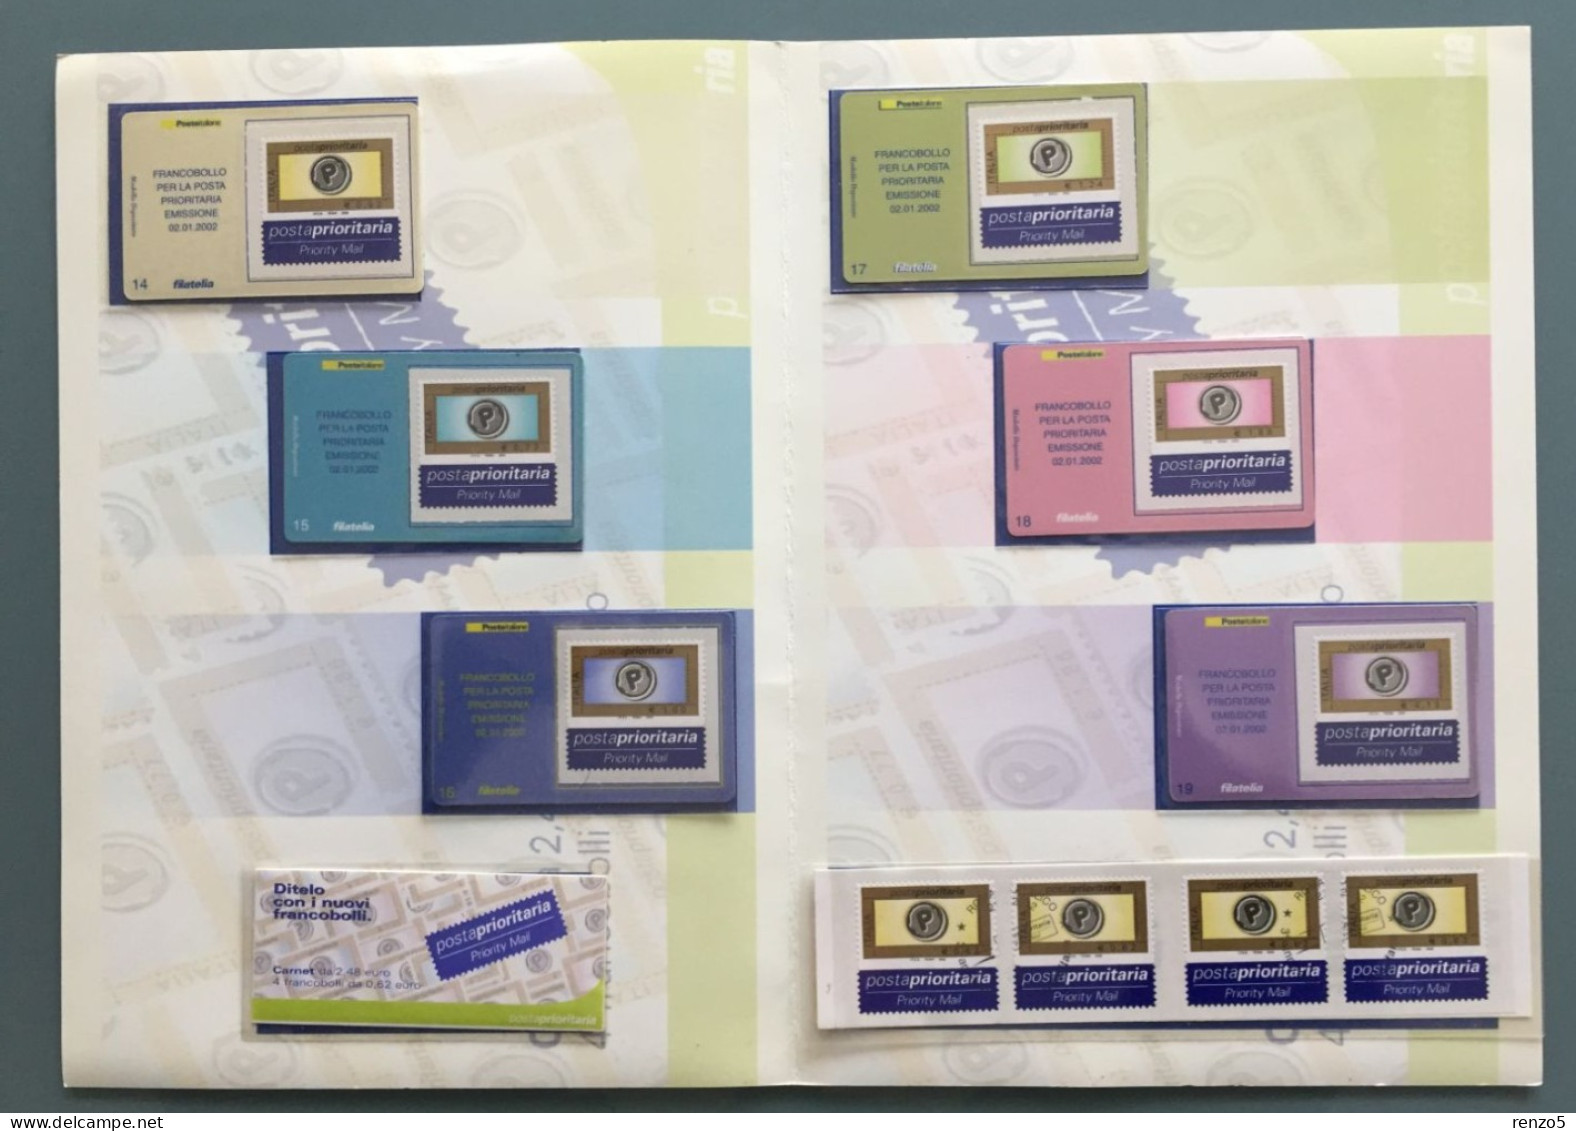 2002 Italia - Folder - Posta Prioritaria E 6 Tessere Filateliche - 18 - Pochettes